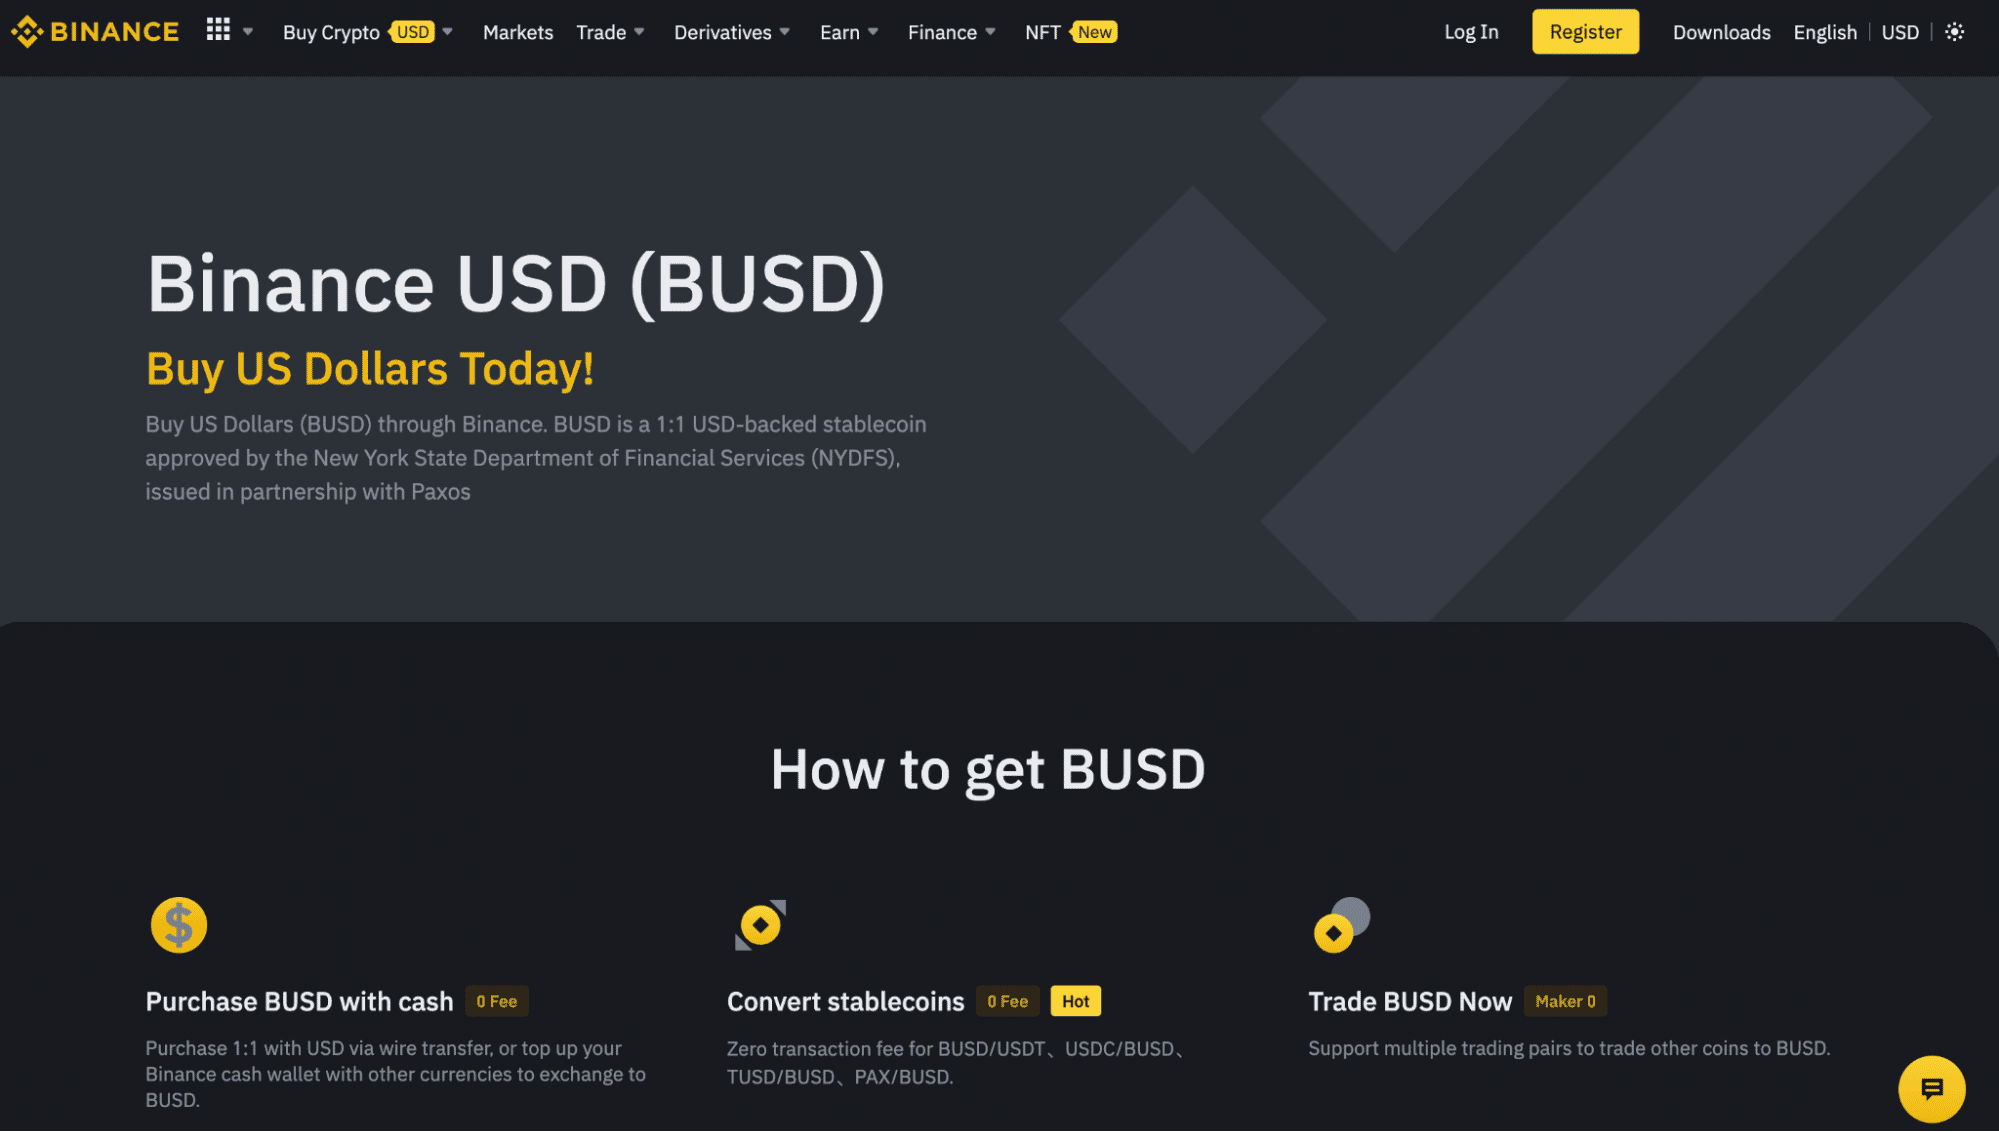 Binance USD’s homepage